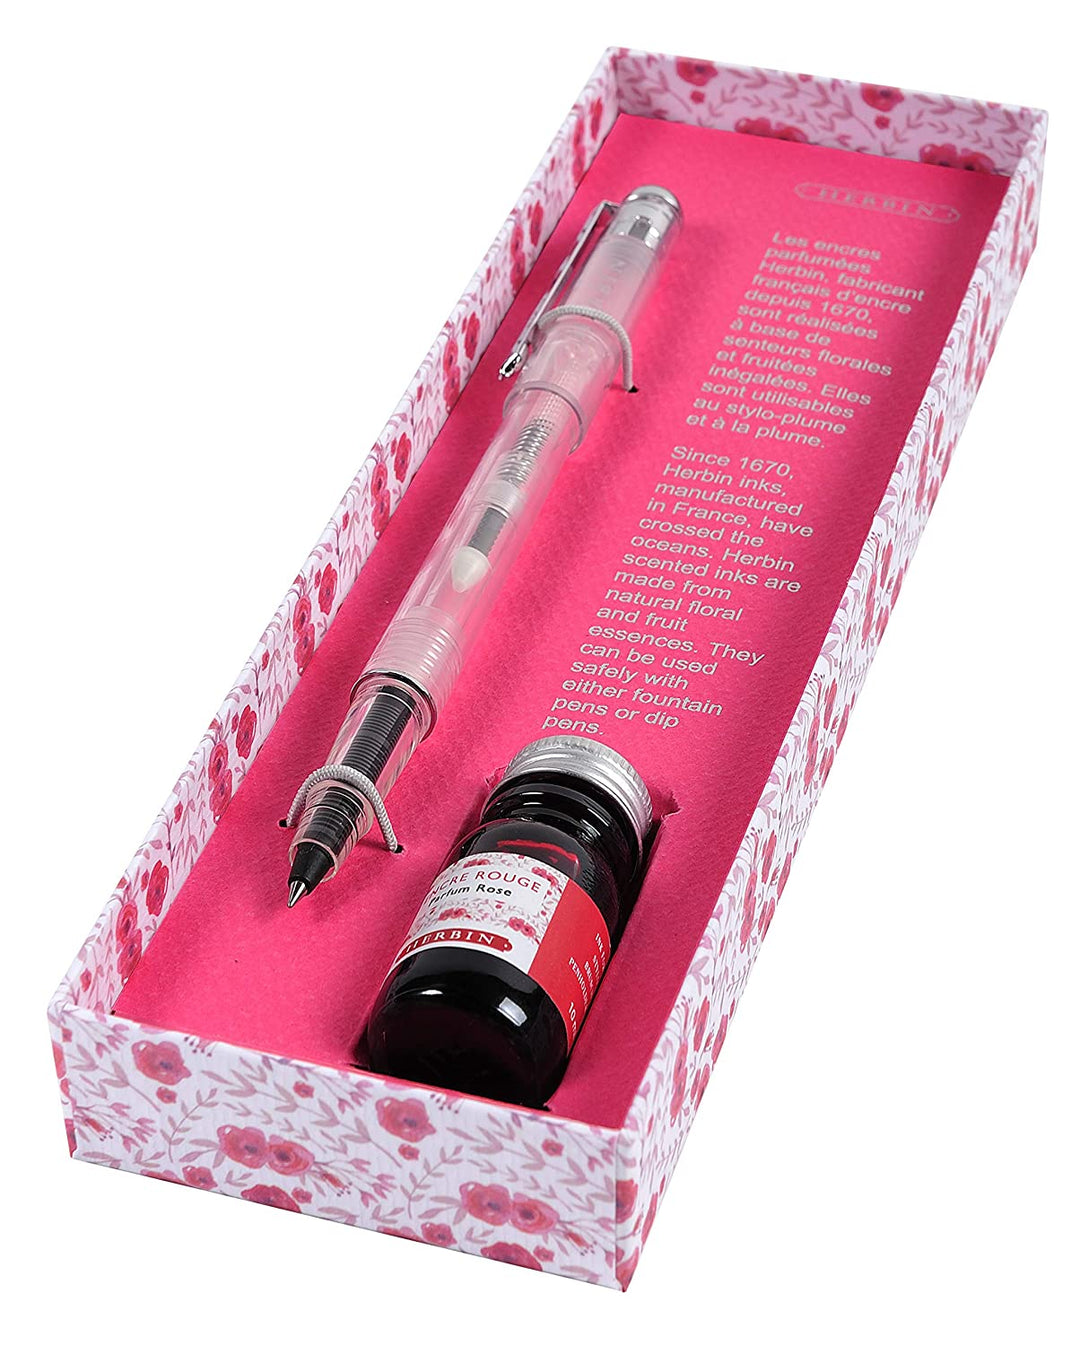 Herbin Set of Rose Scented Ink Bottle & Rollerball Pen